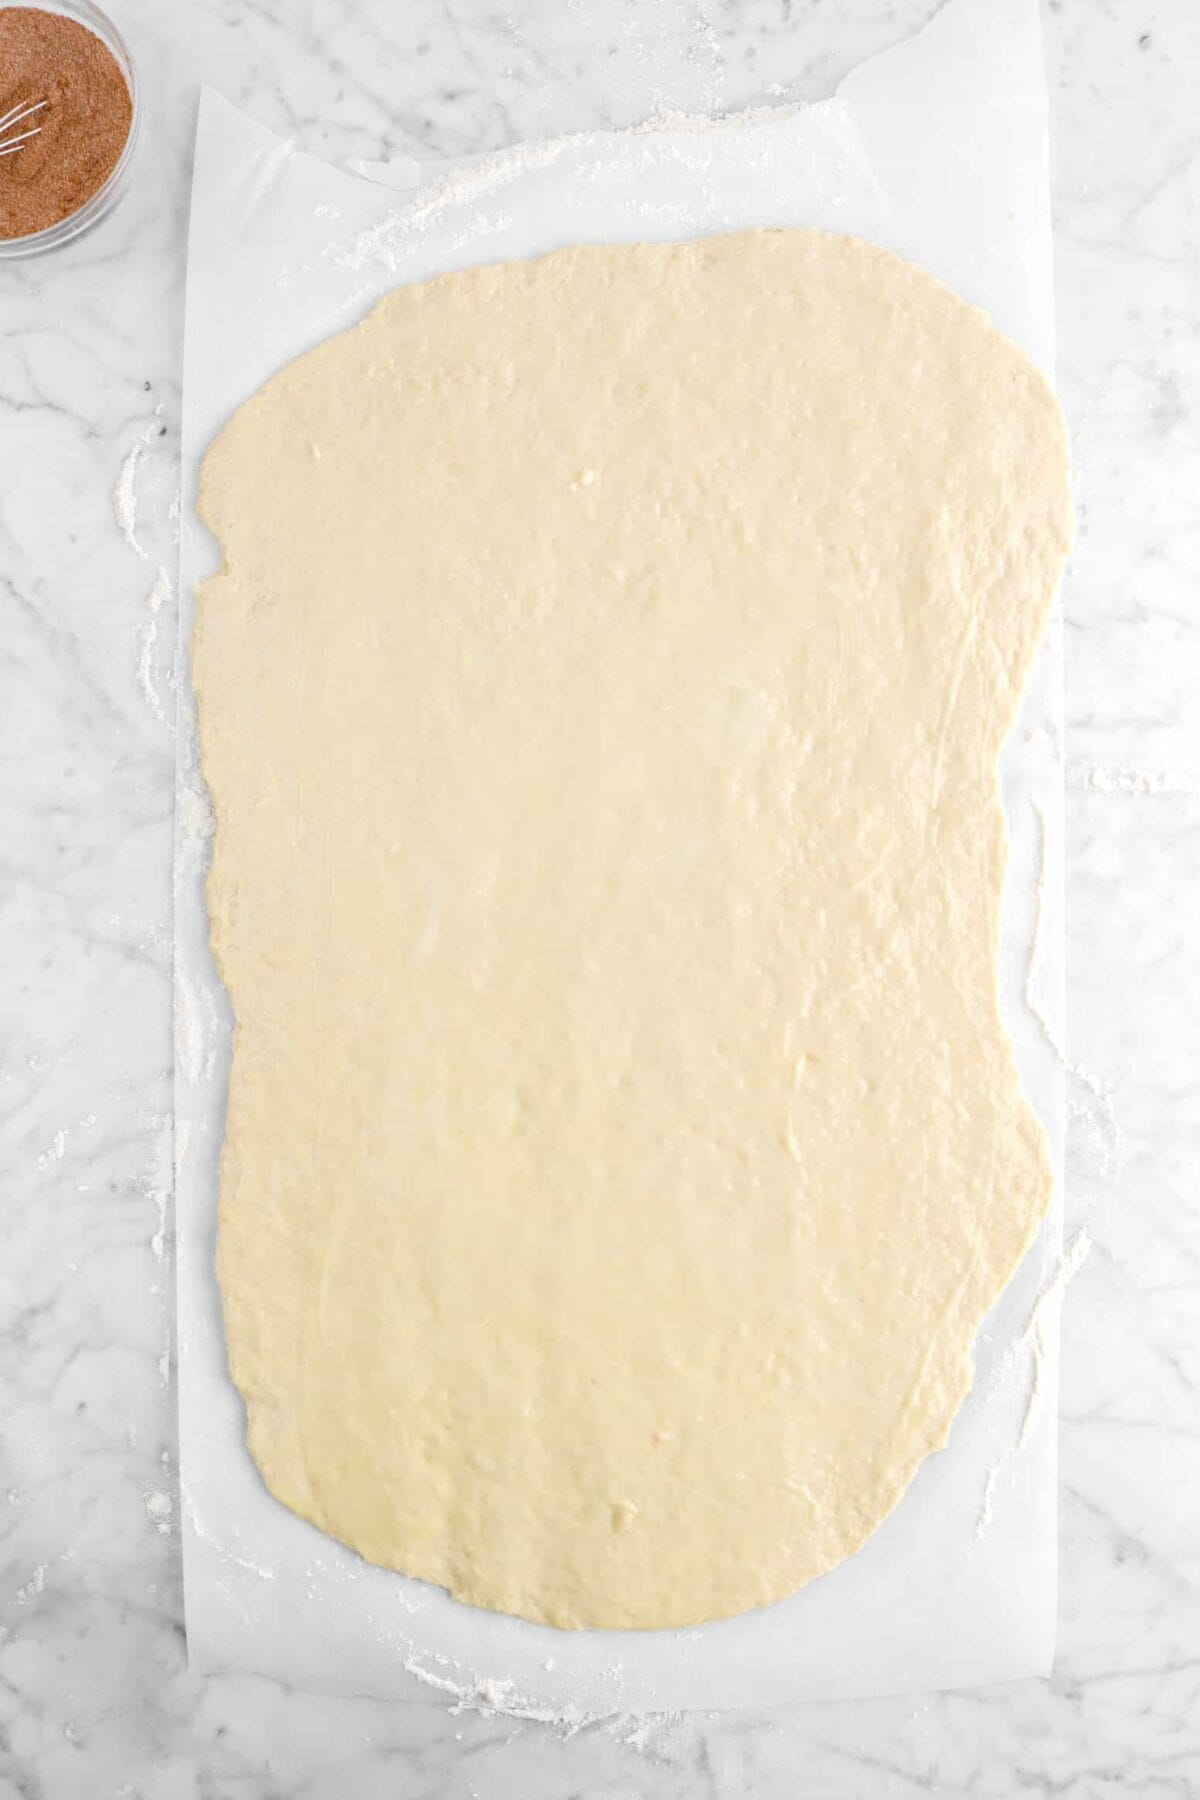 butter spread across dough